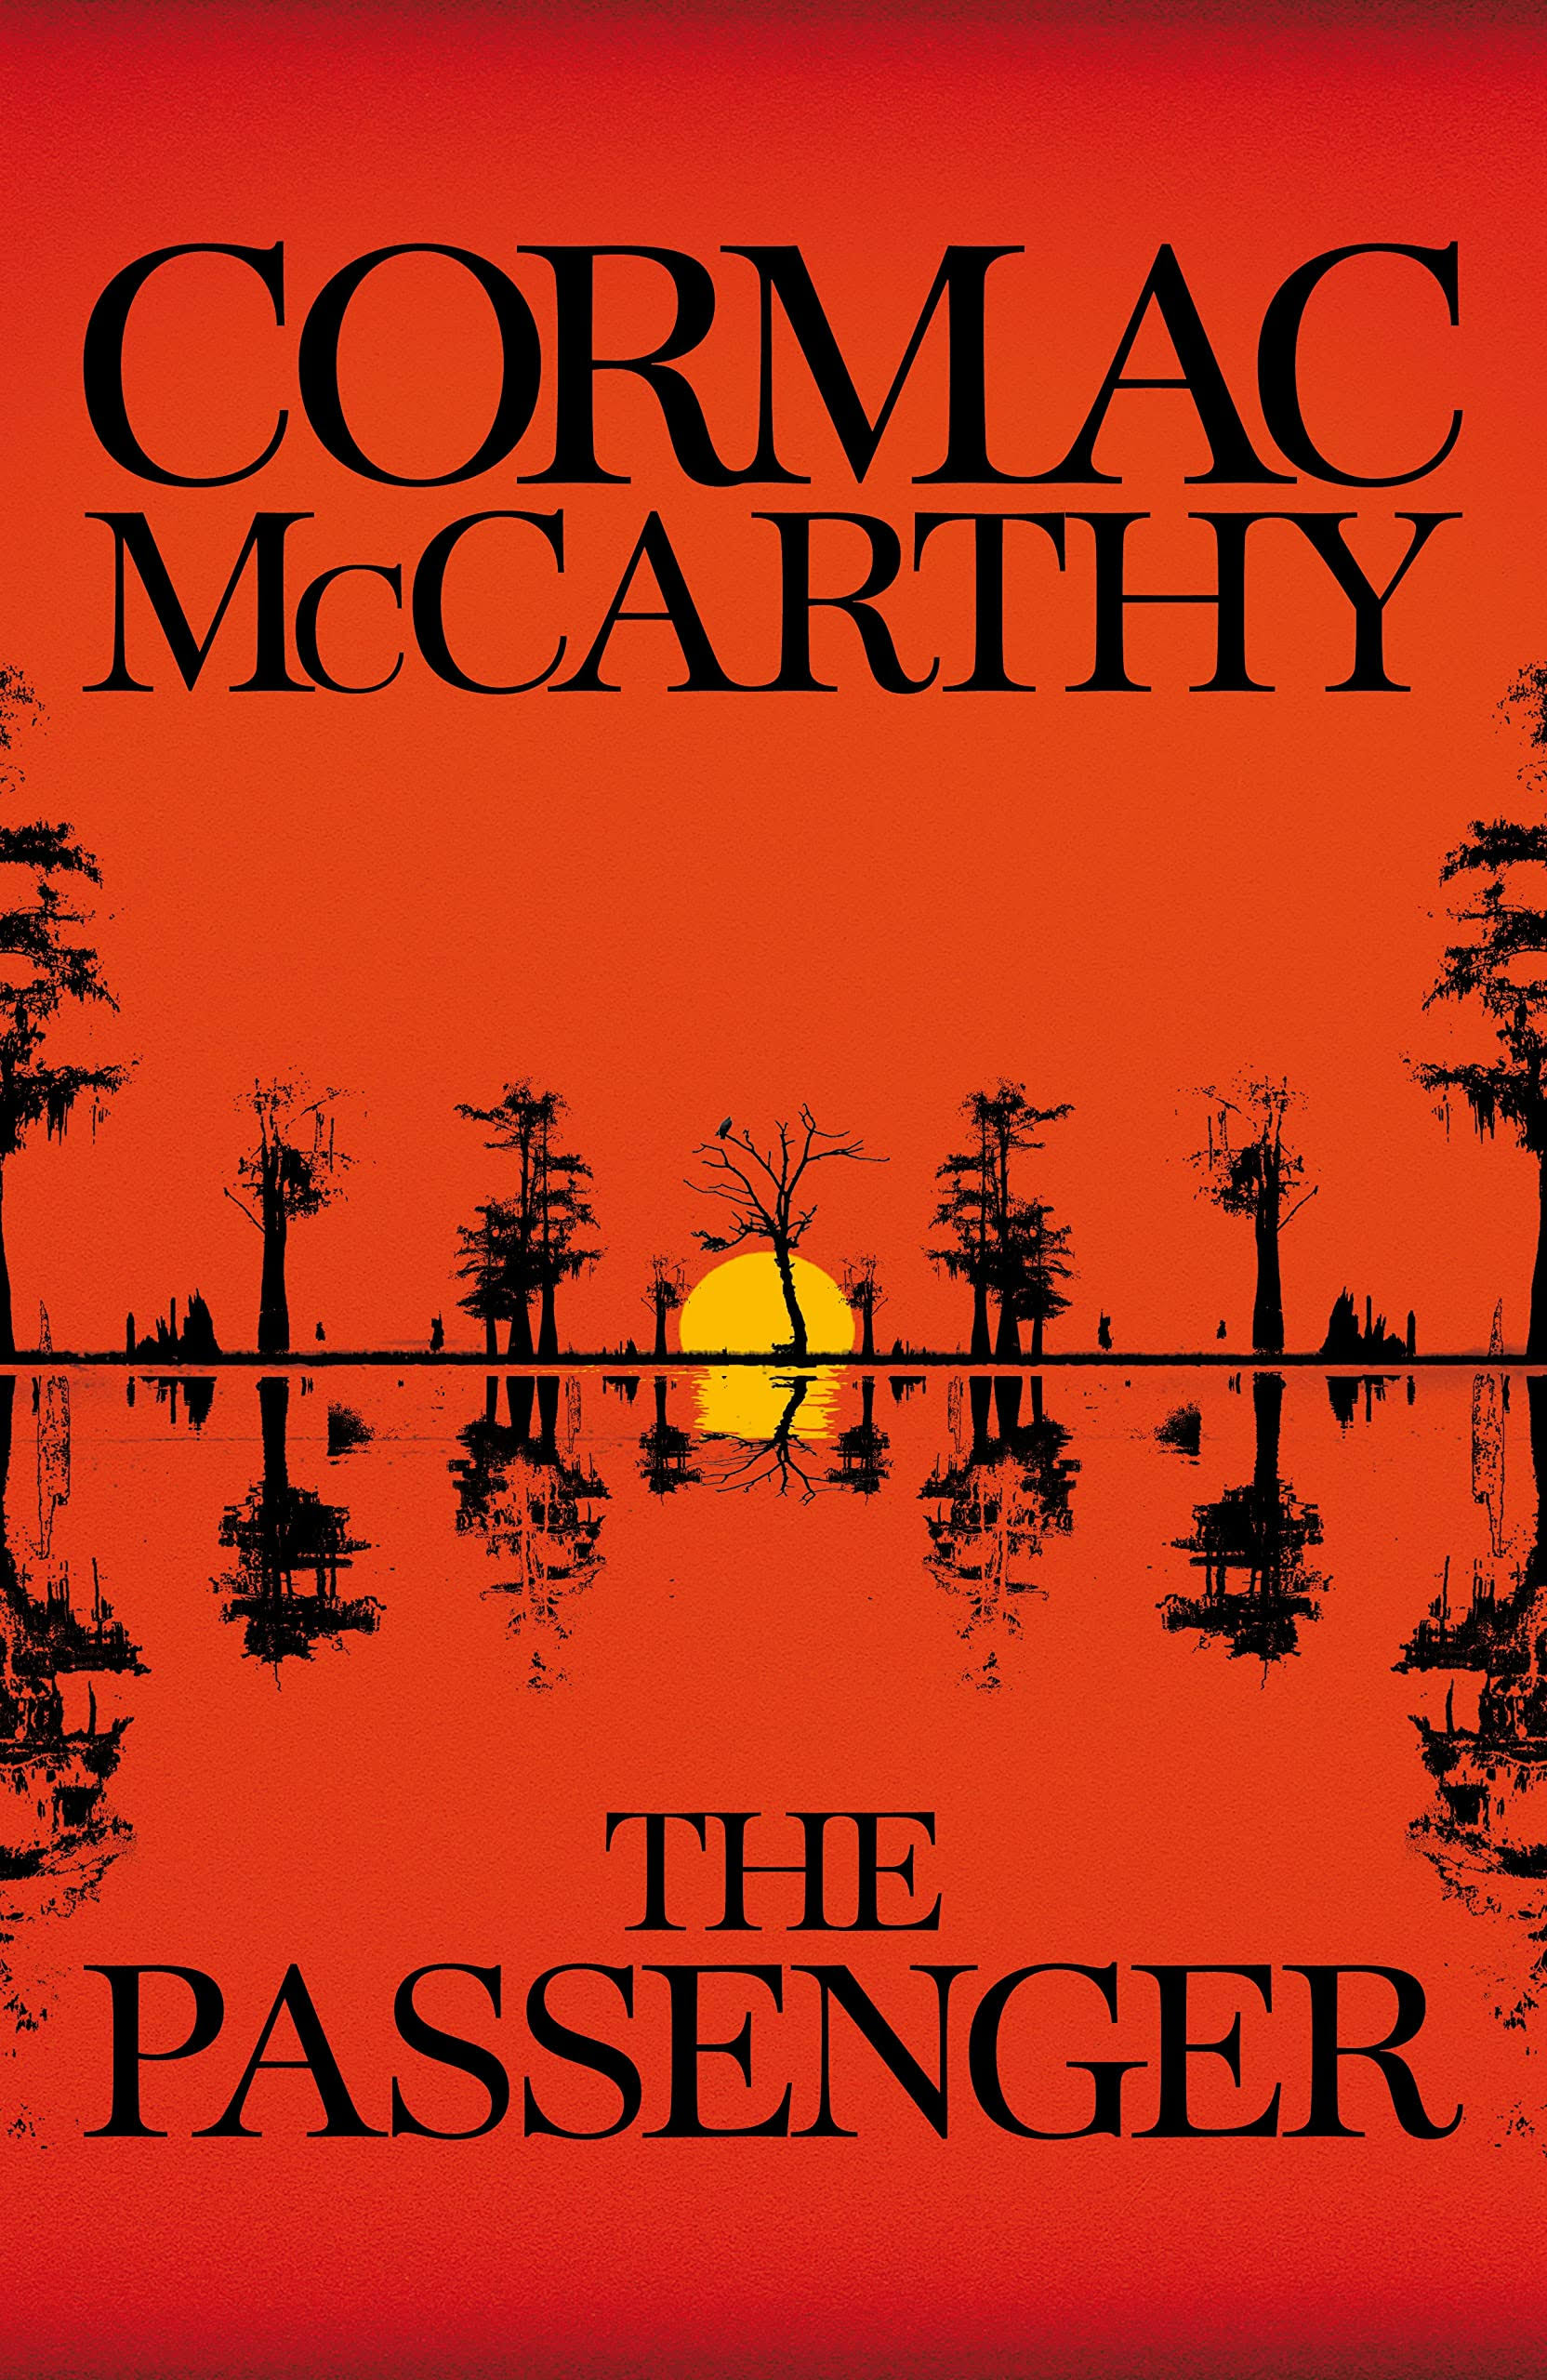 The Passenger - Cormac McCarthy